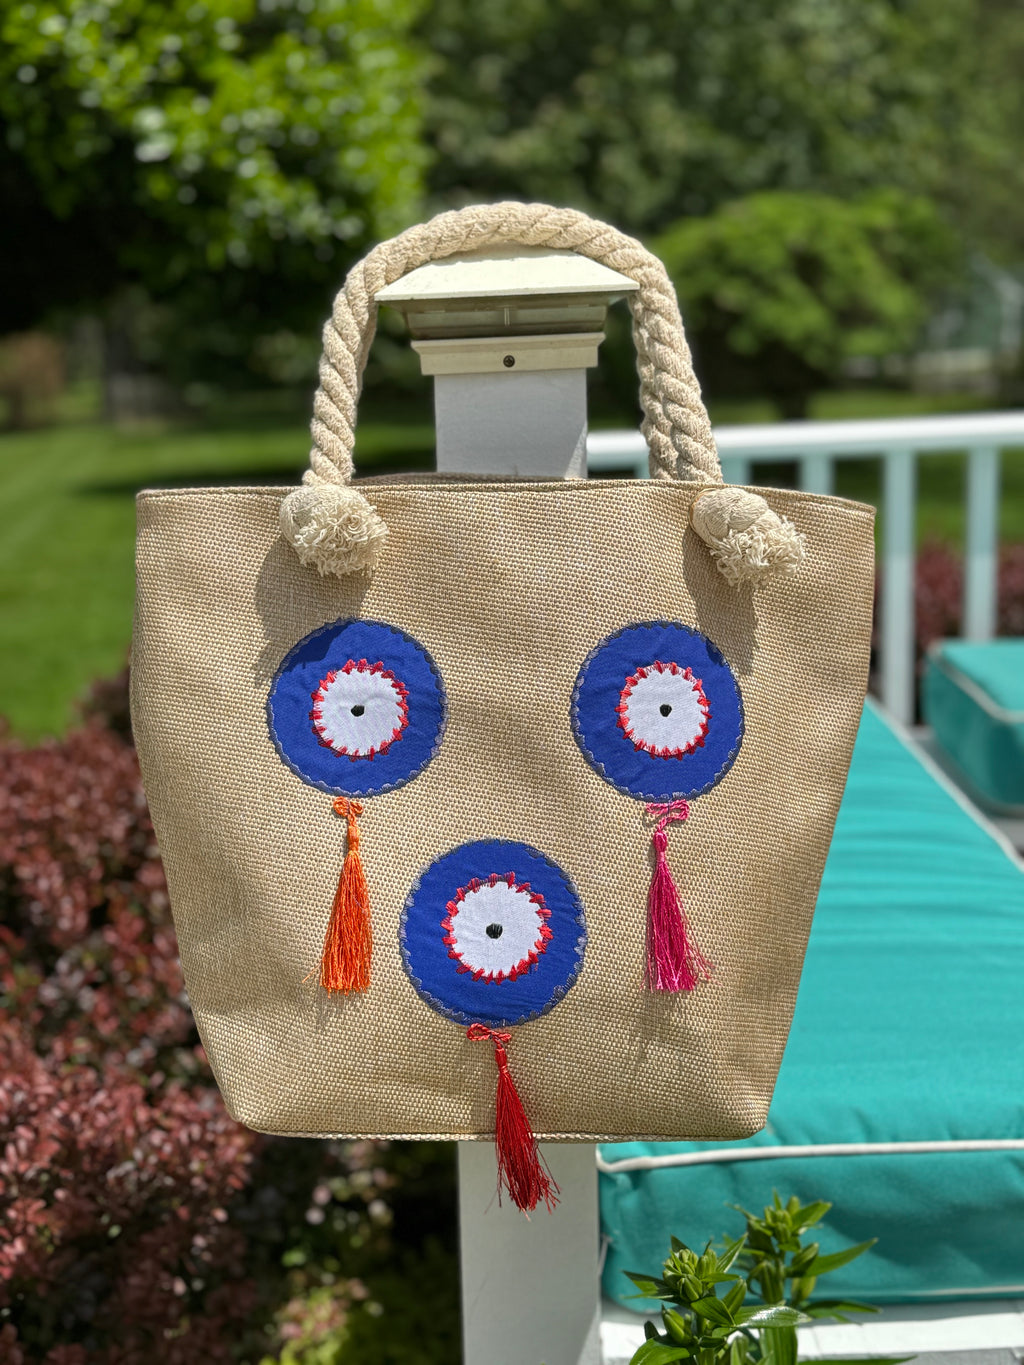 Beach bag with Blue evil eye design